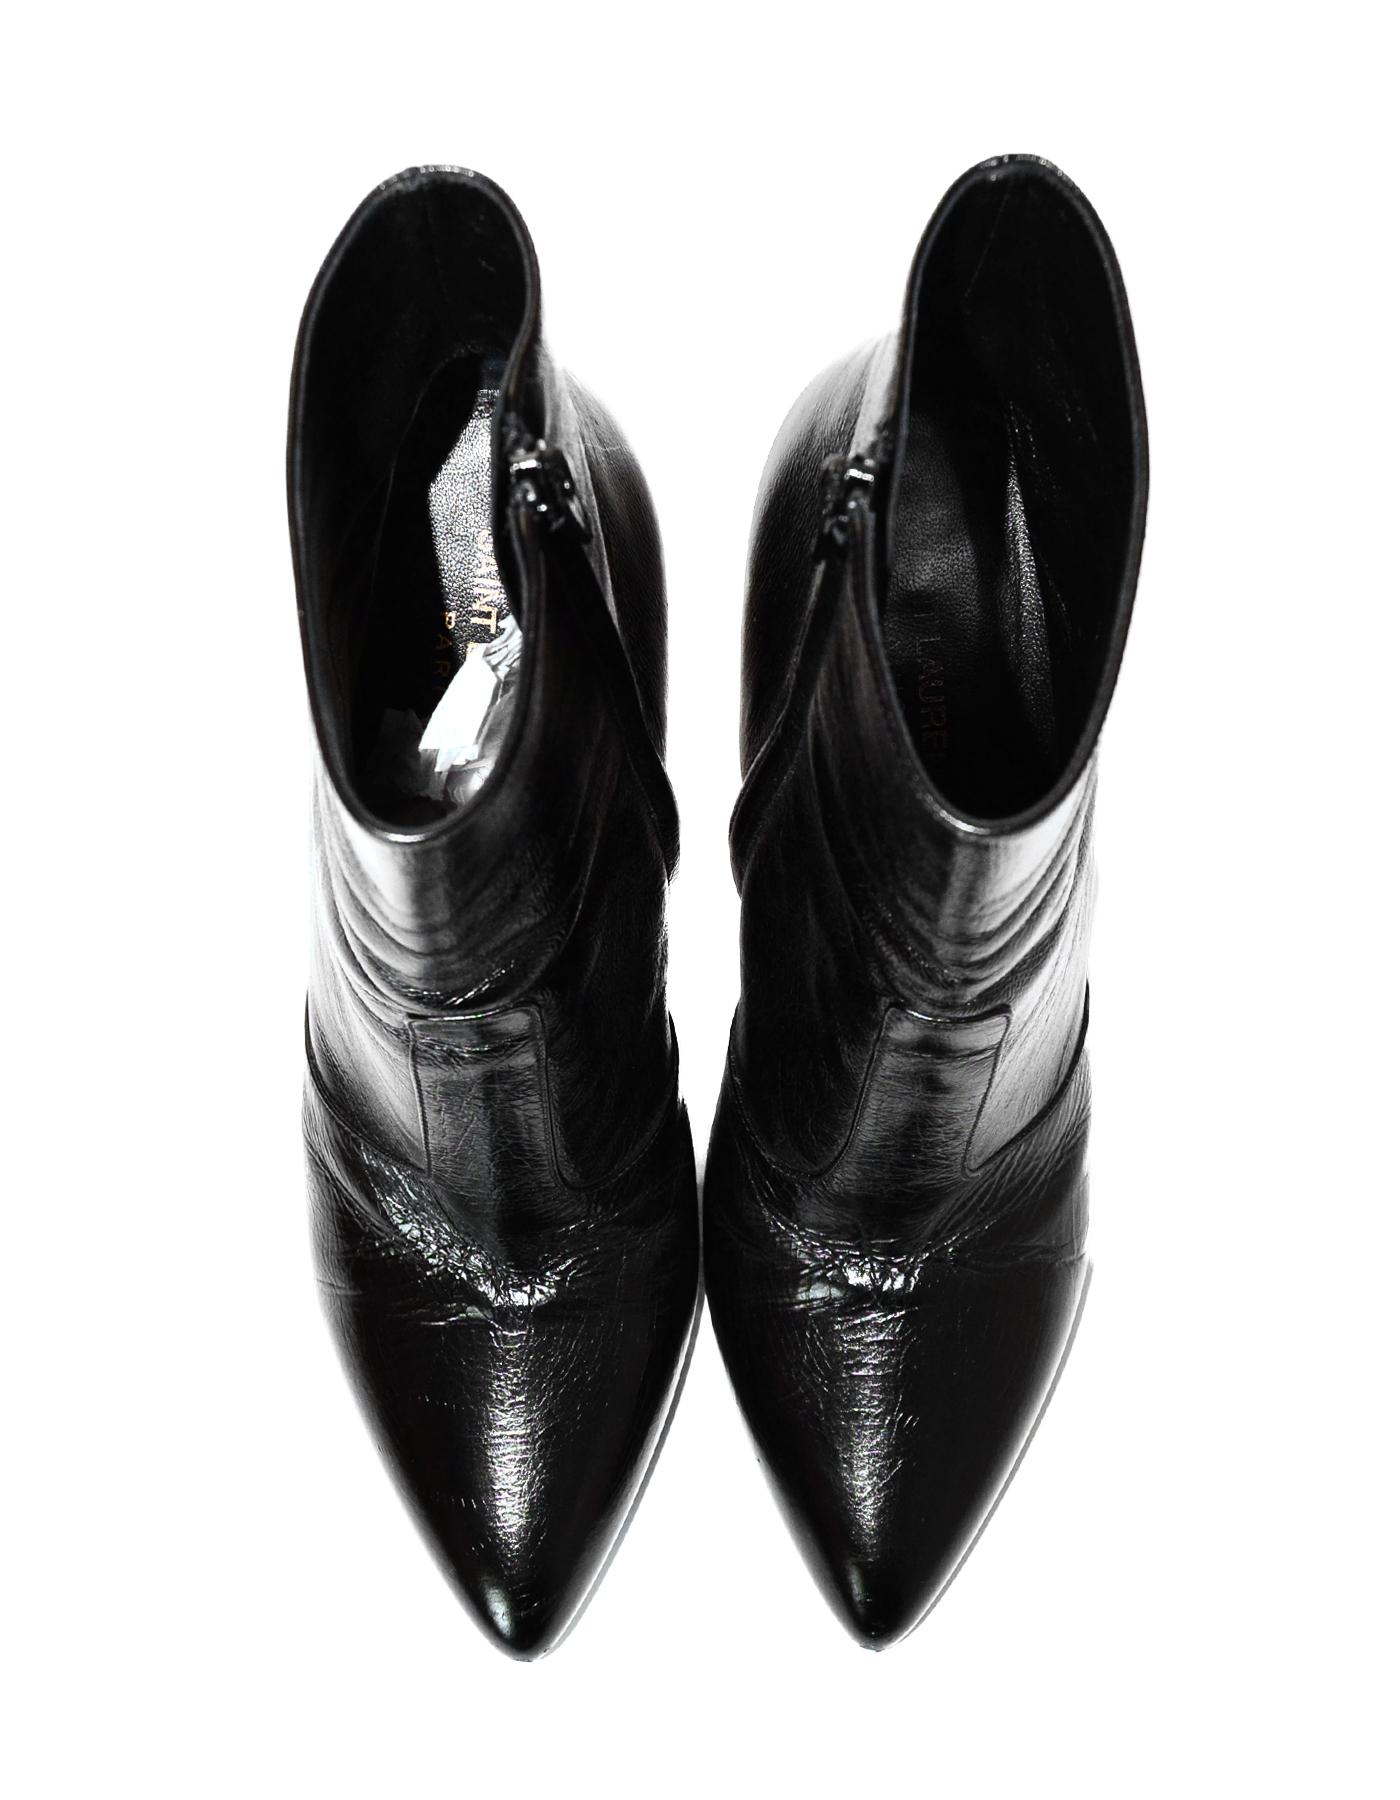 YSL Yves Saint Laurent Fetish Black Leather Ankle Boot Sz 40 3